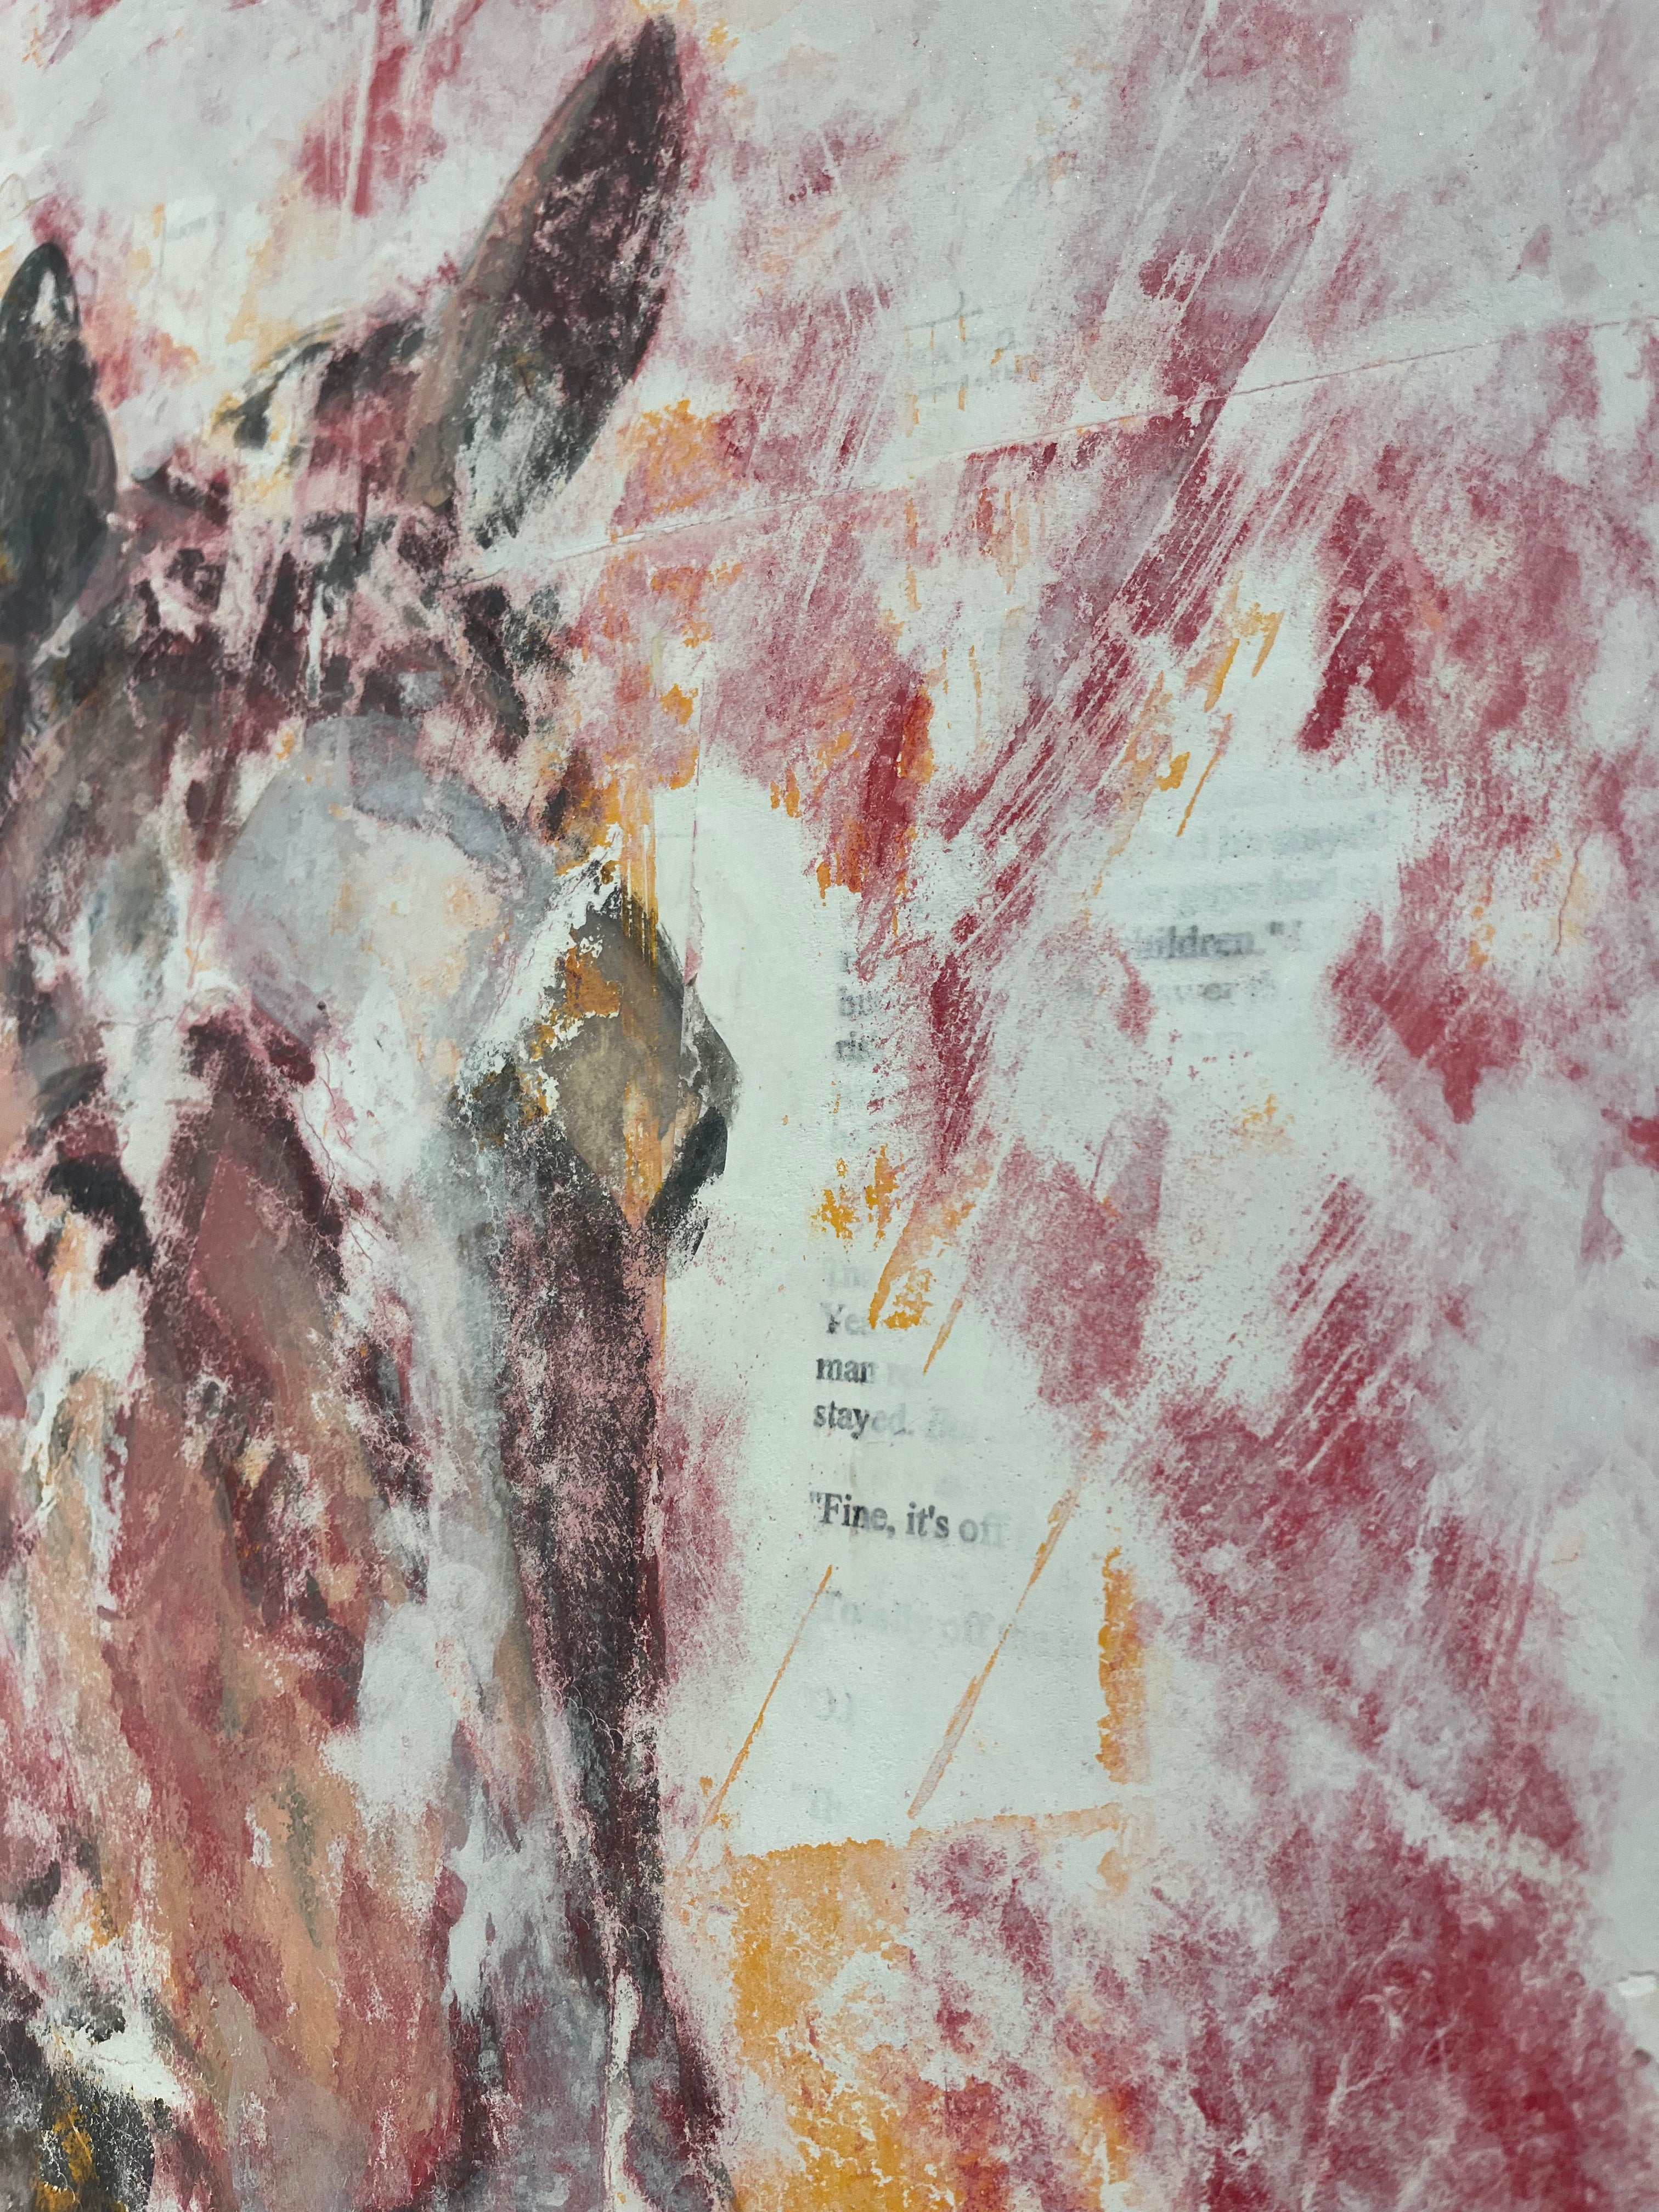 Nicole Charbonnet oversized original abstract artwork with hidden words. 